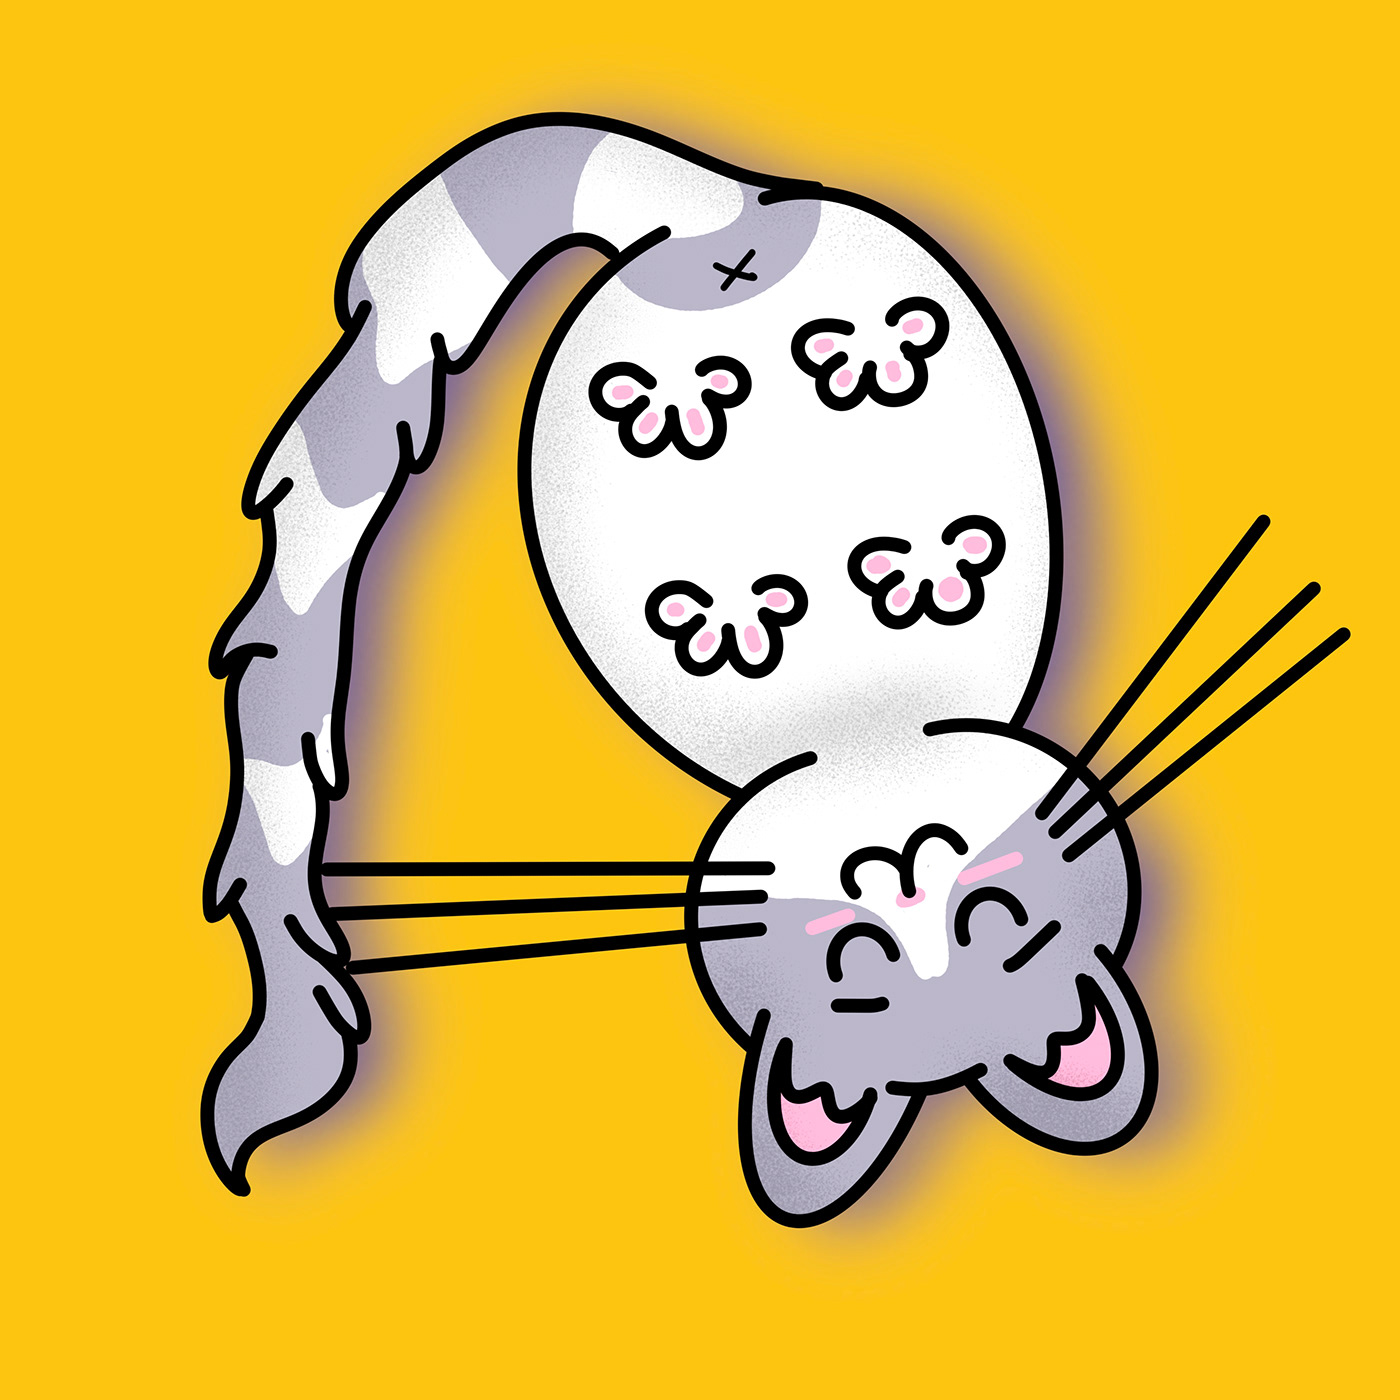 36daysoftype kawaii kawaii illustration Procreate photoshop cats cute illustration